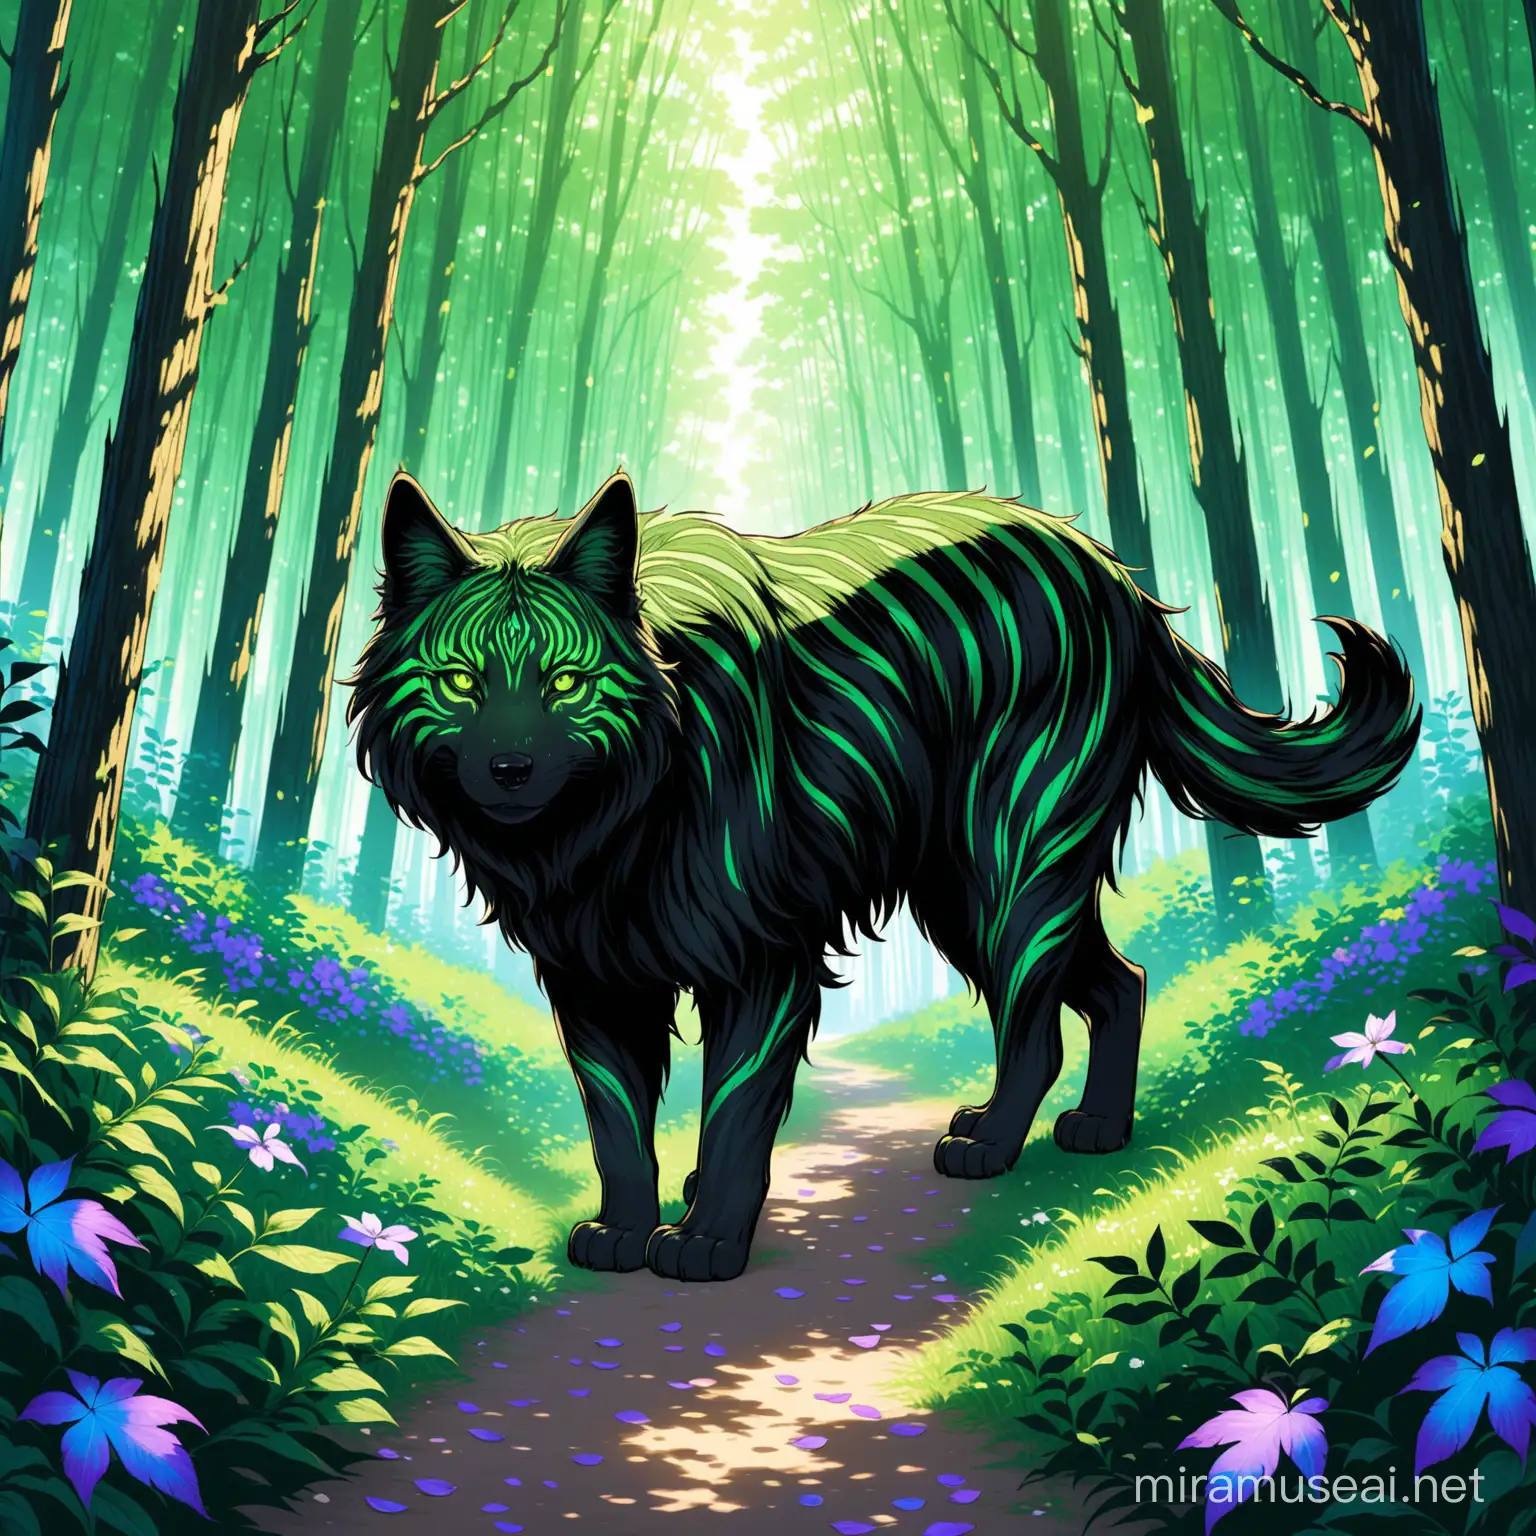 Enigmatic Creature Verdant in Mystical Forest